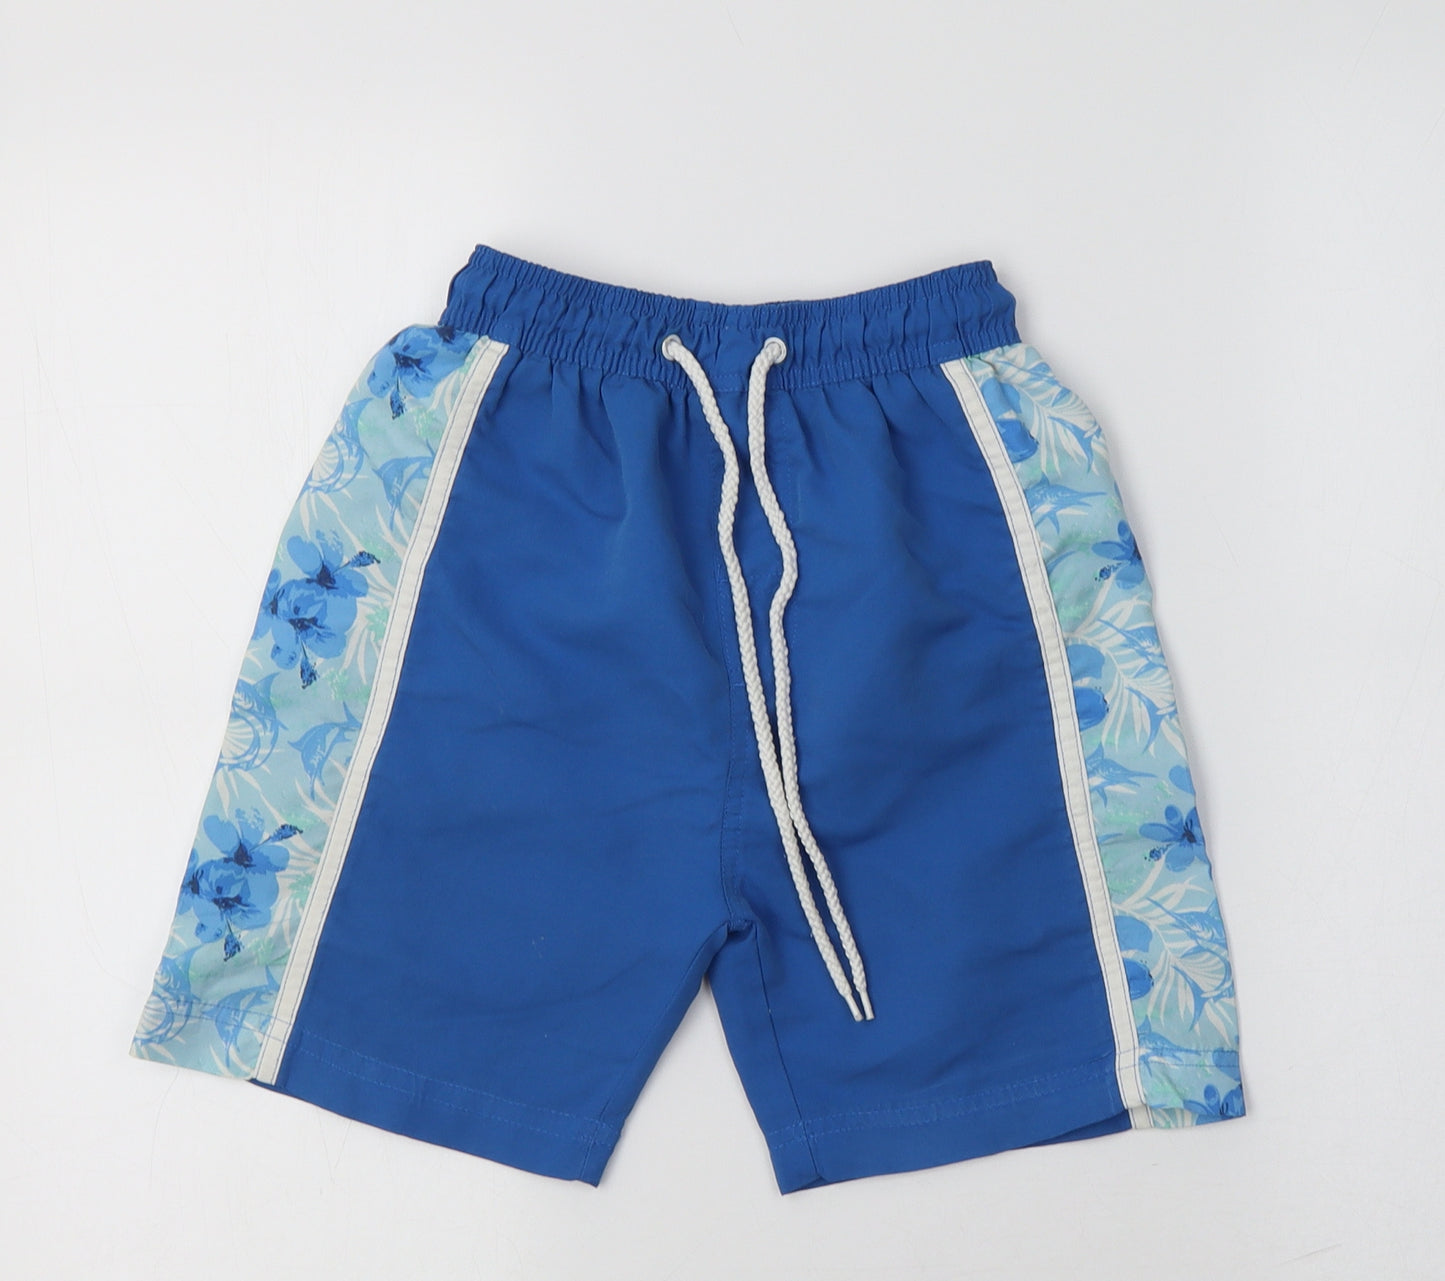 Cargo Bay Boys Blue Floral Polyester Bermuda Shorts Size 5-6 Years  Regular